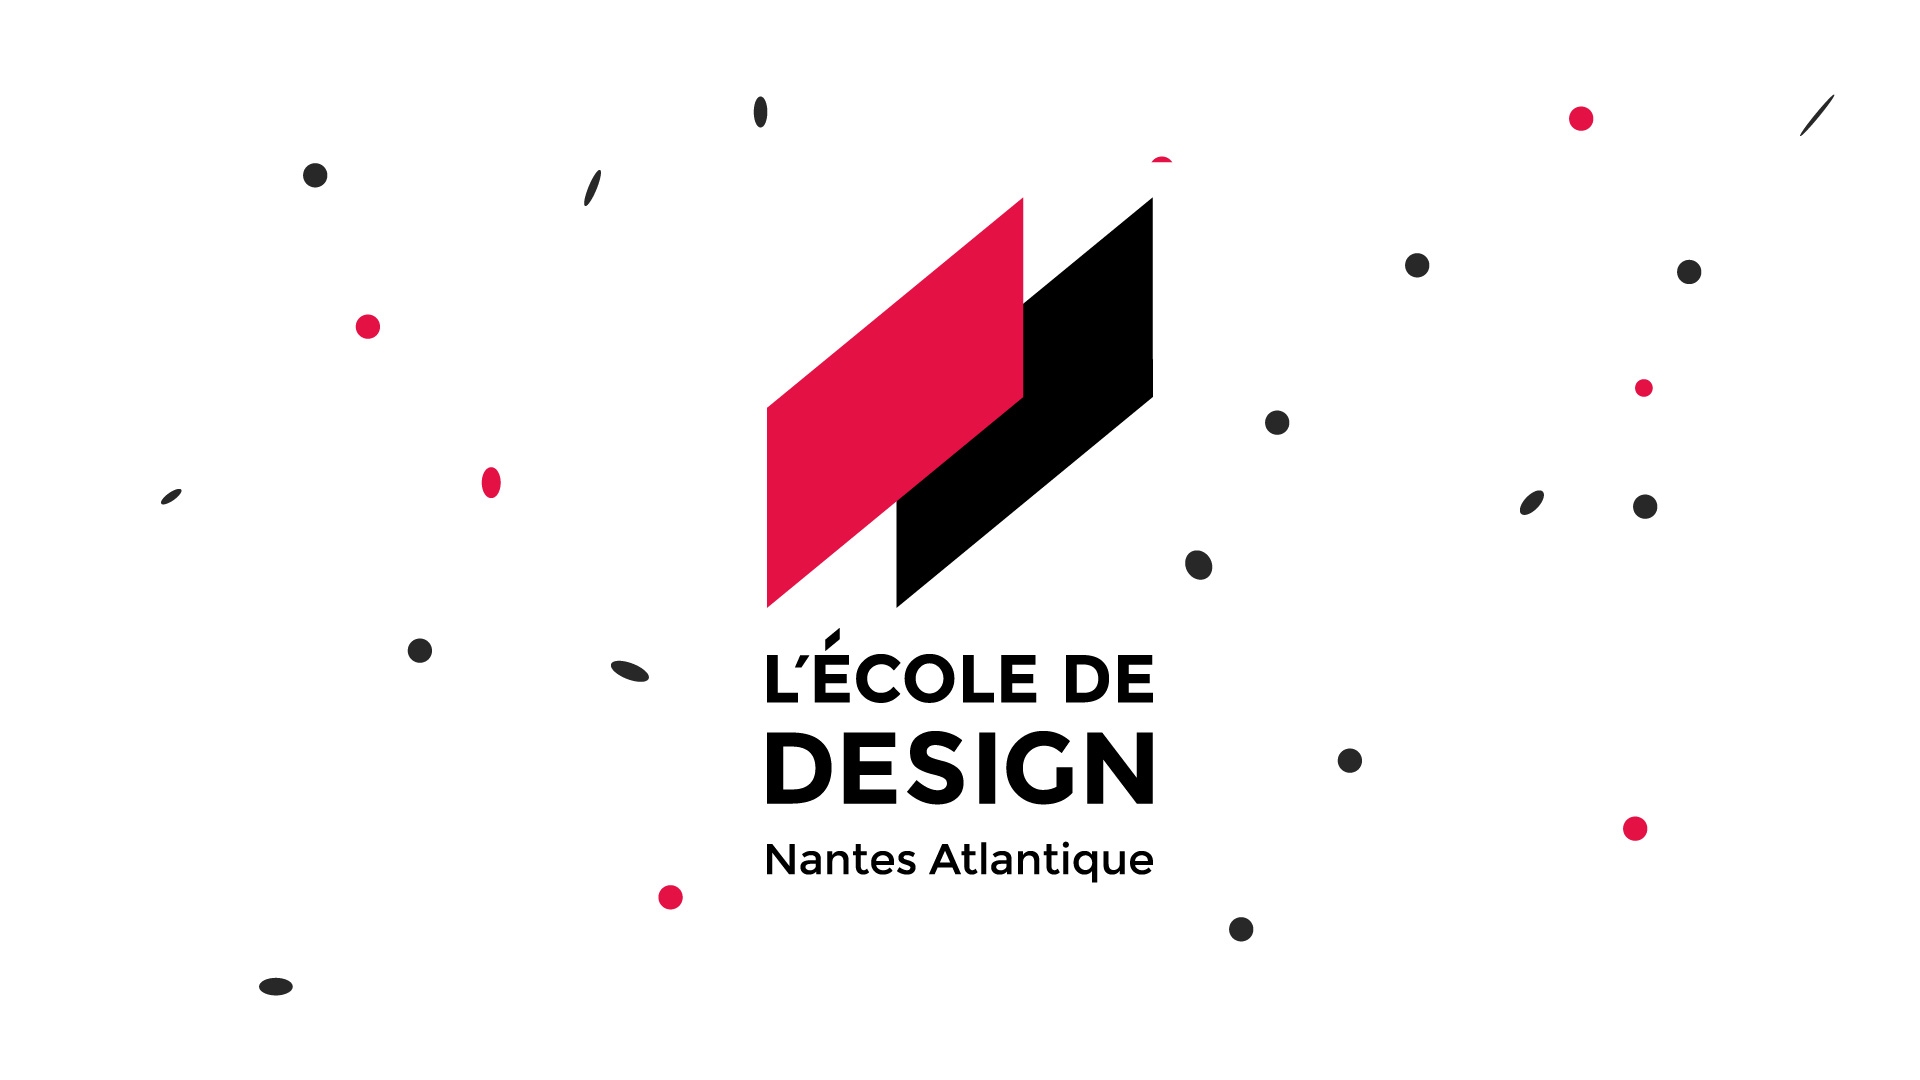 Ecole de Design Nantes Atlantique